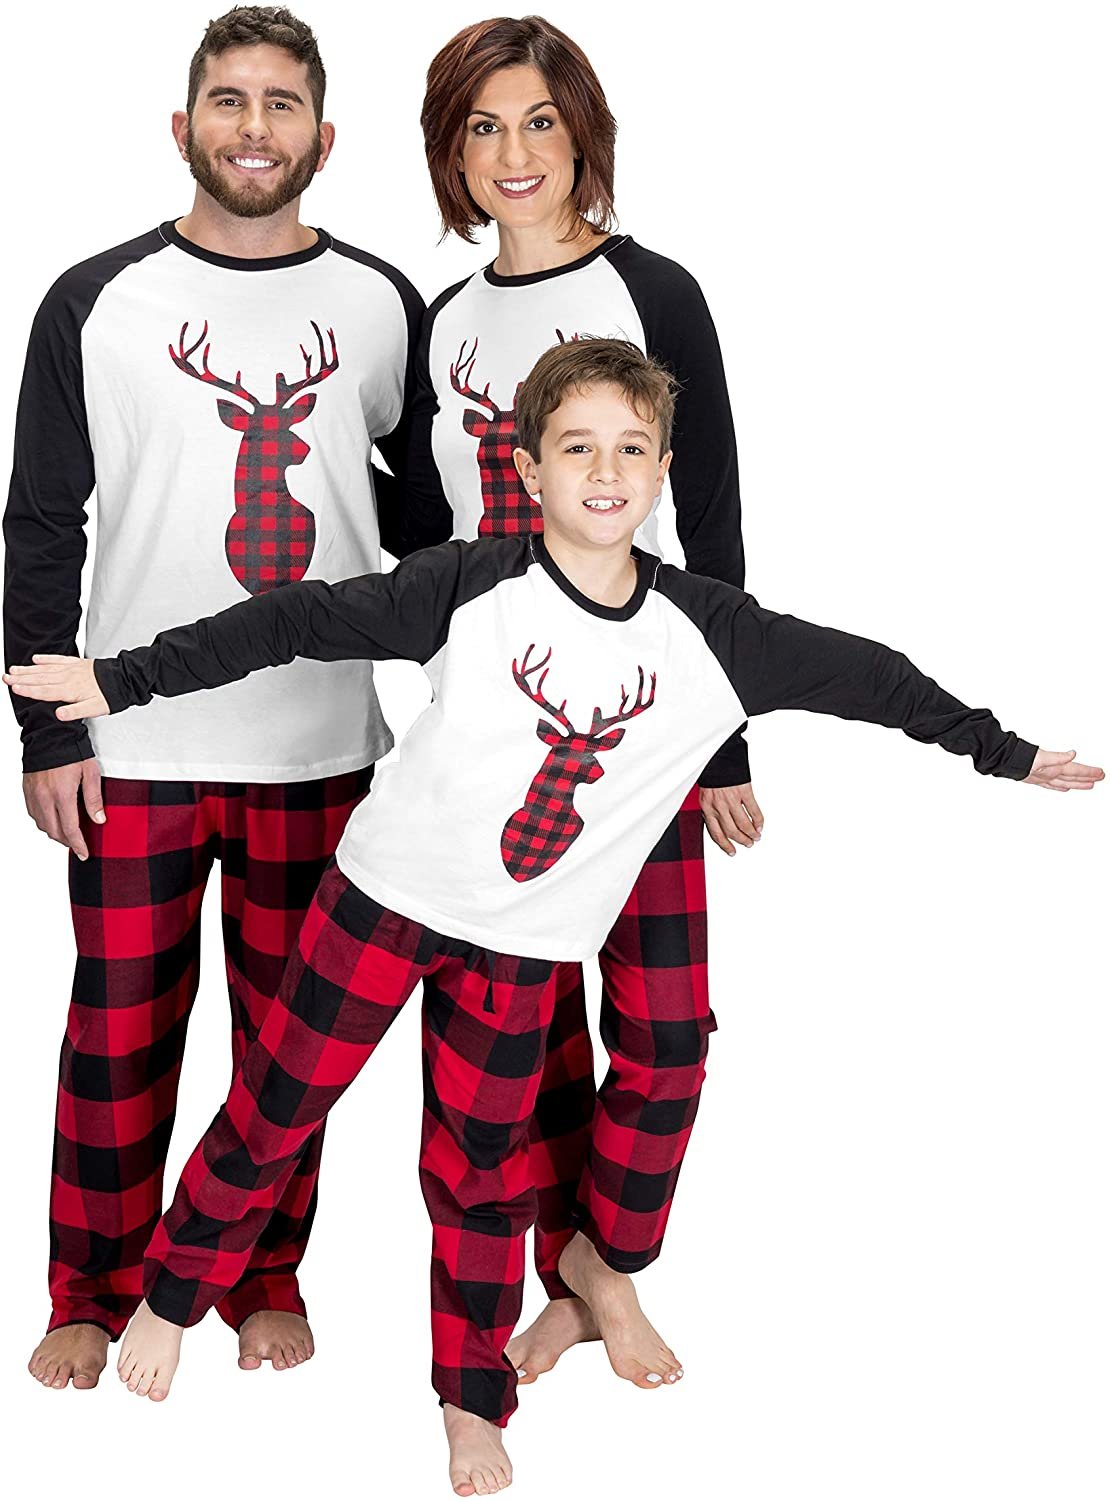 Christmas Matching Family Pajama Sets Printed Tops and Deer Plaid Xmas Sleepwear